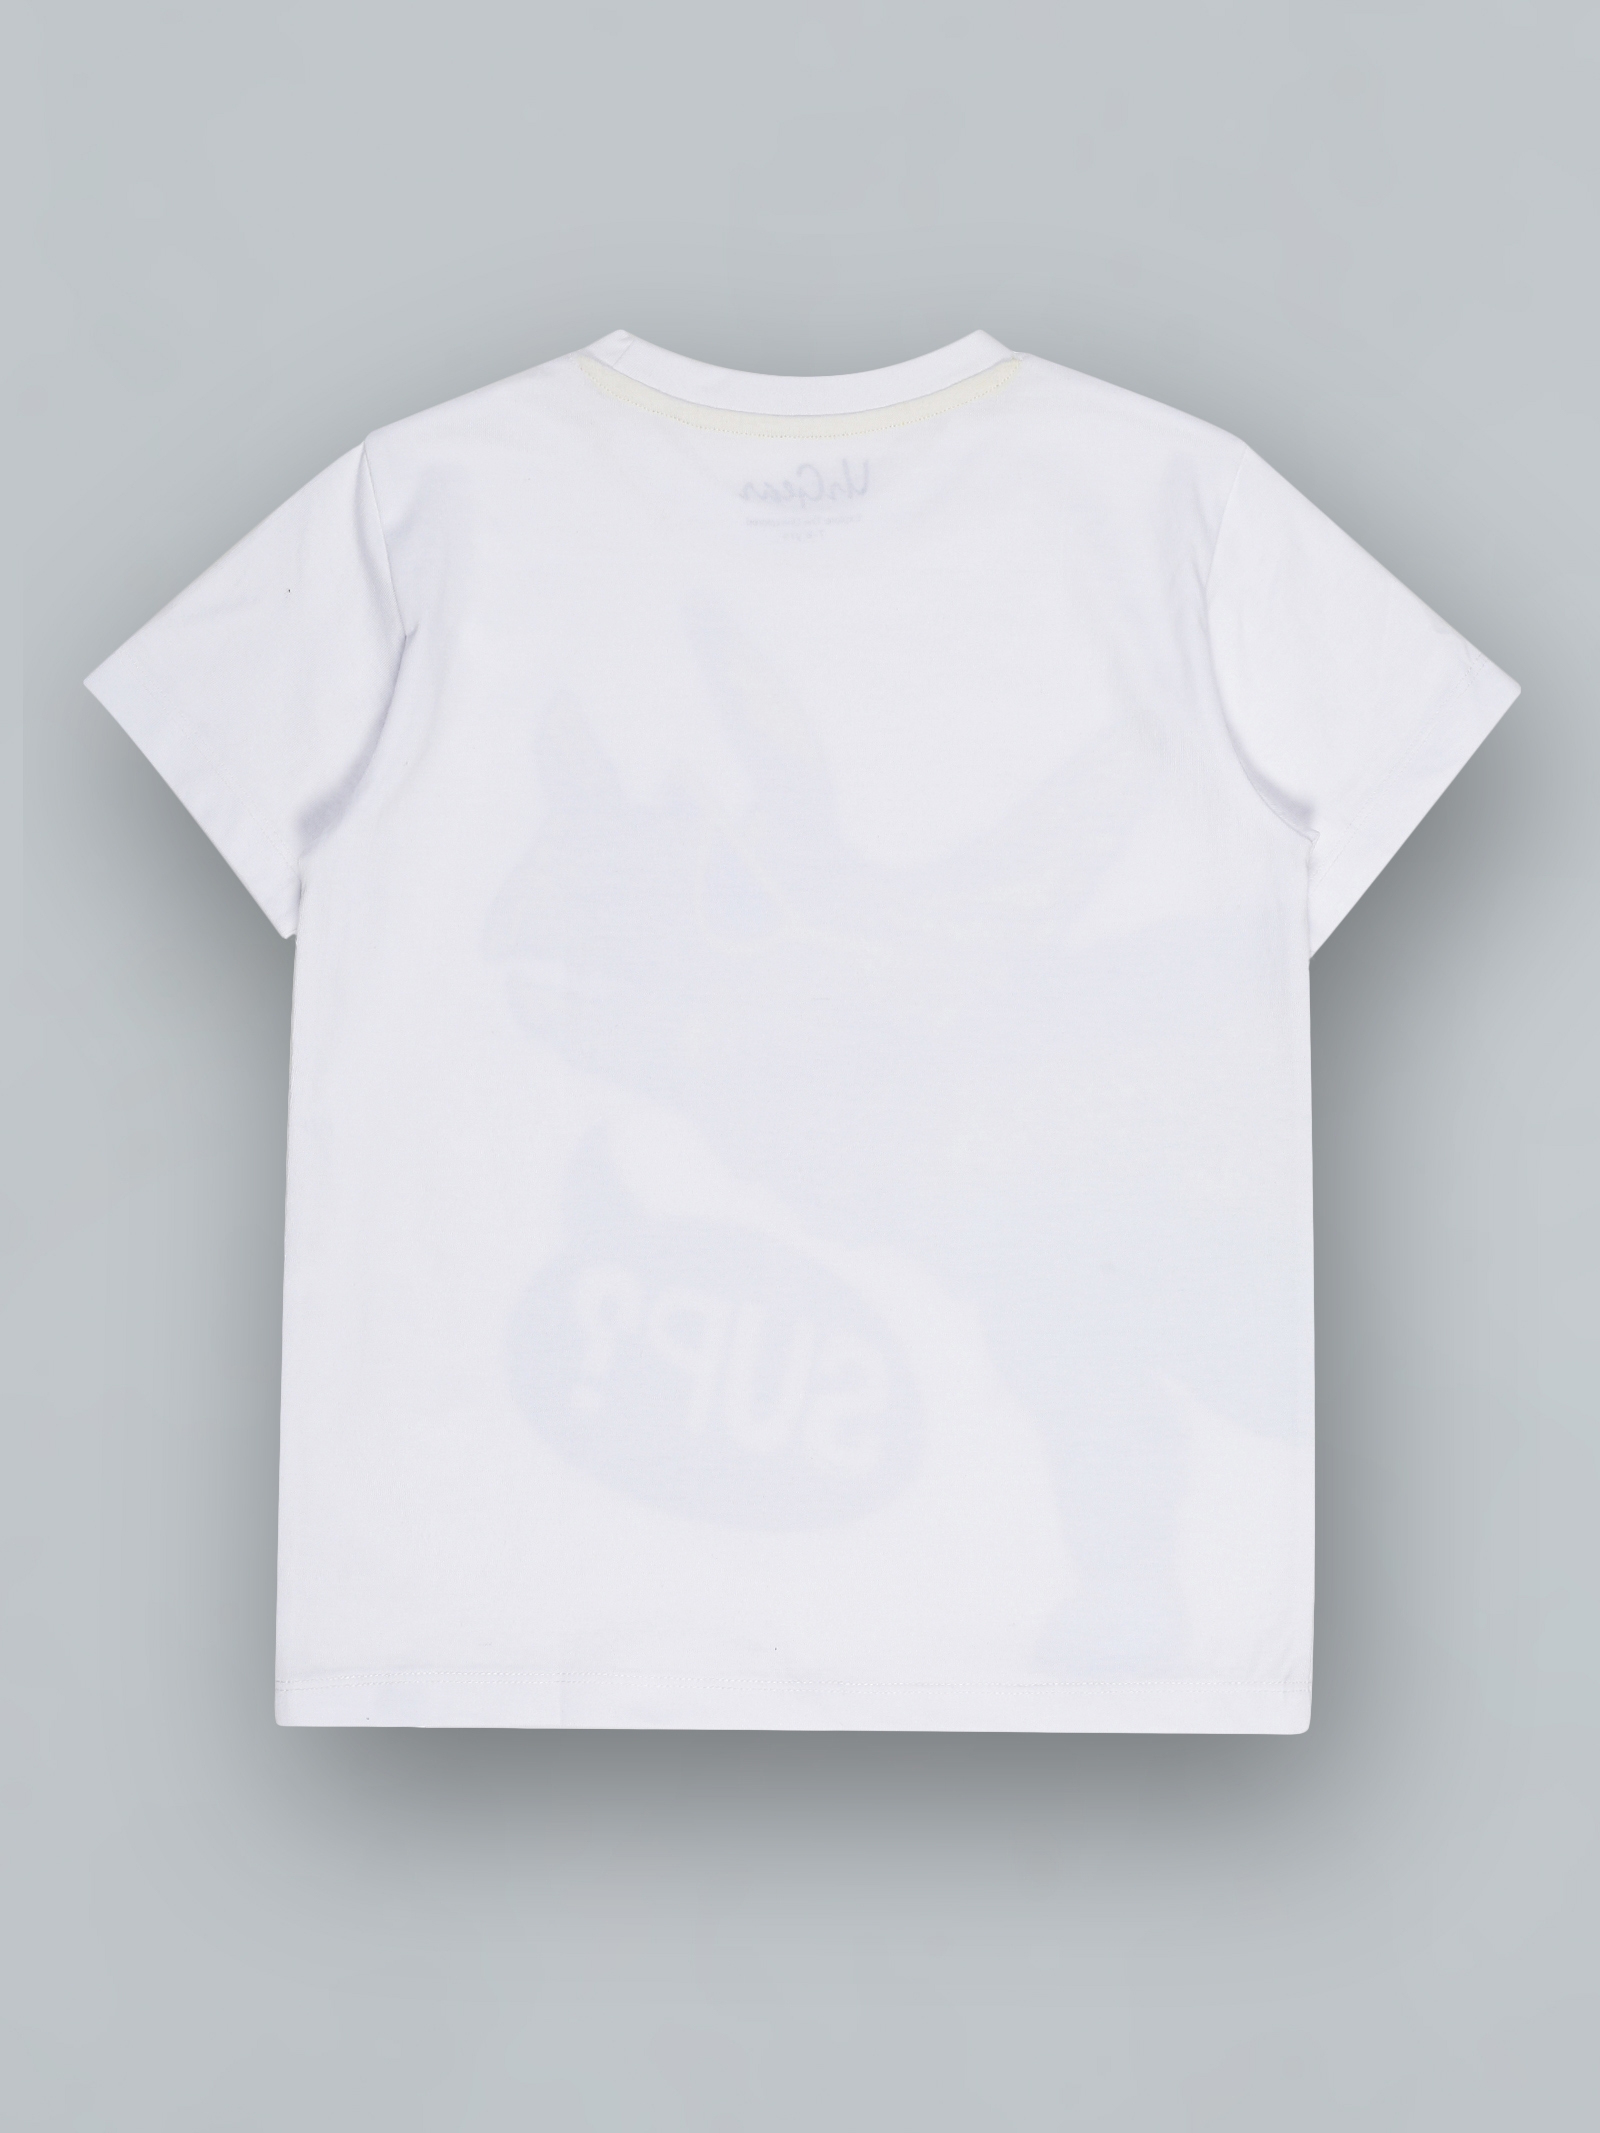 UrGear Kids White Graphic & Typographic Printed Cotton T-Shirt